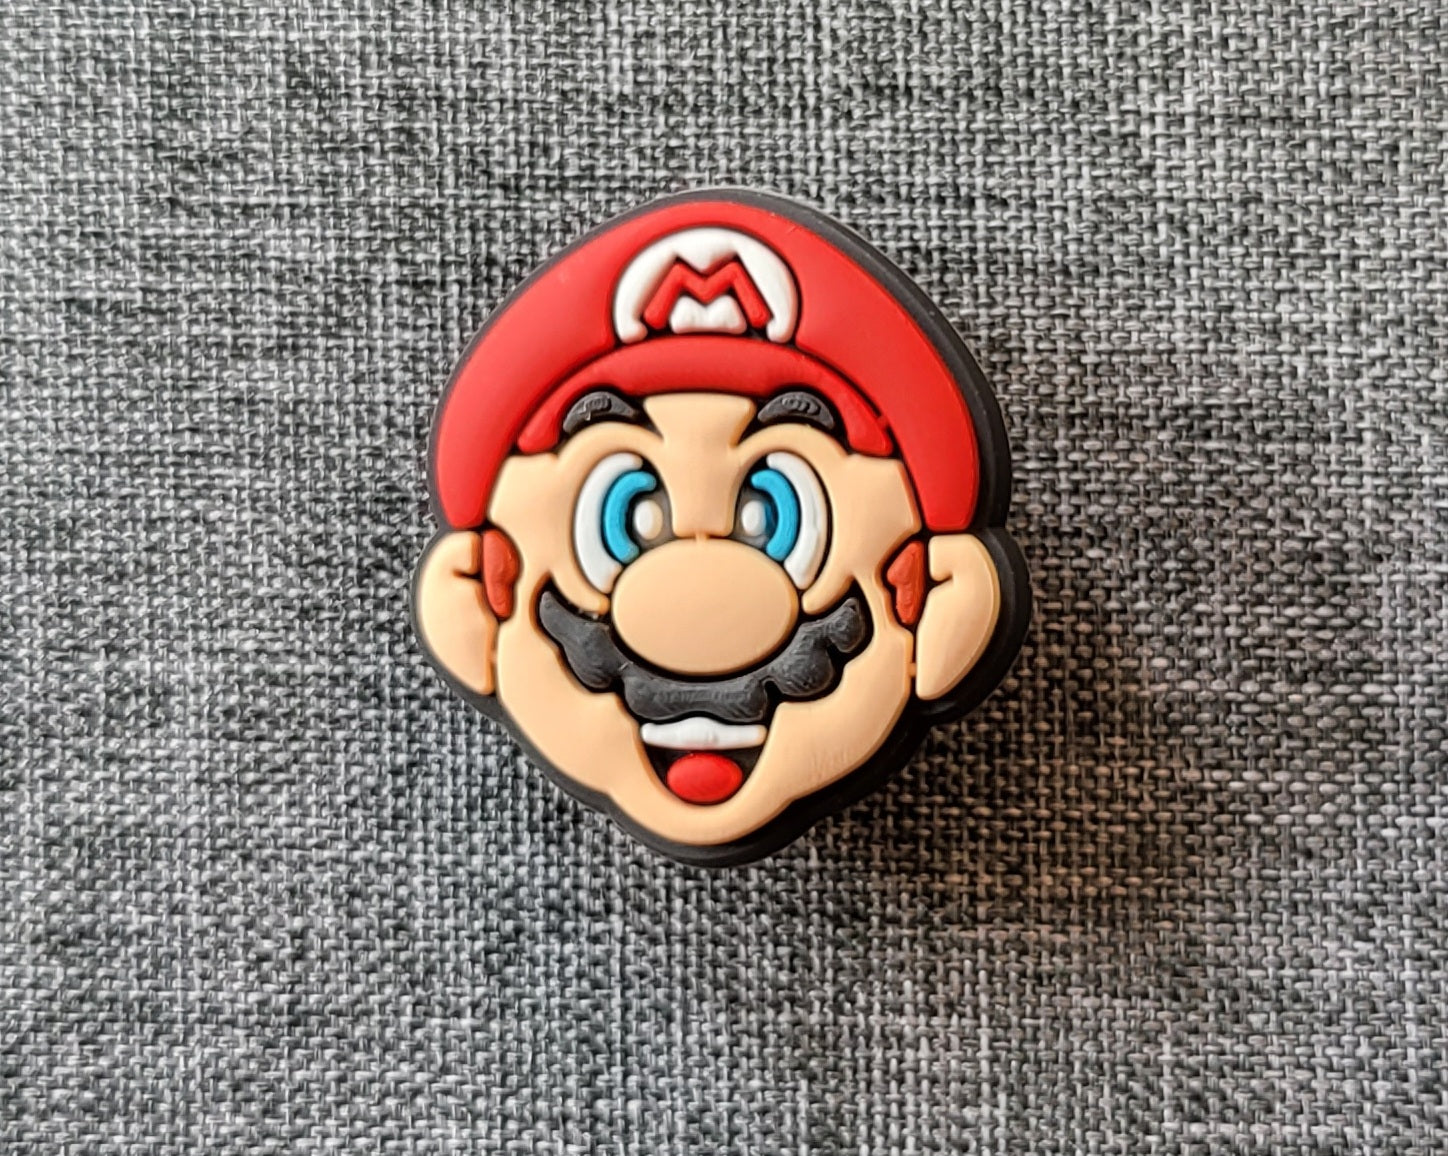 Pin for Crocs Mushroom Mario Bros